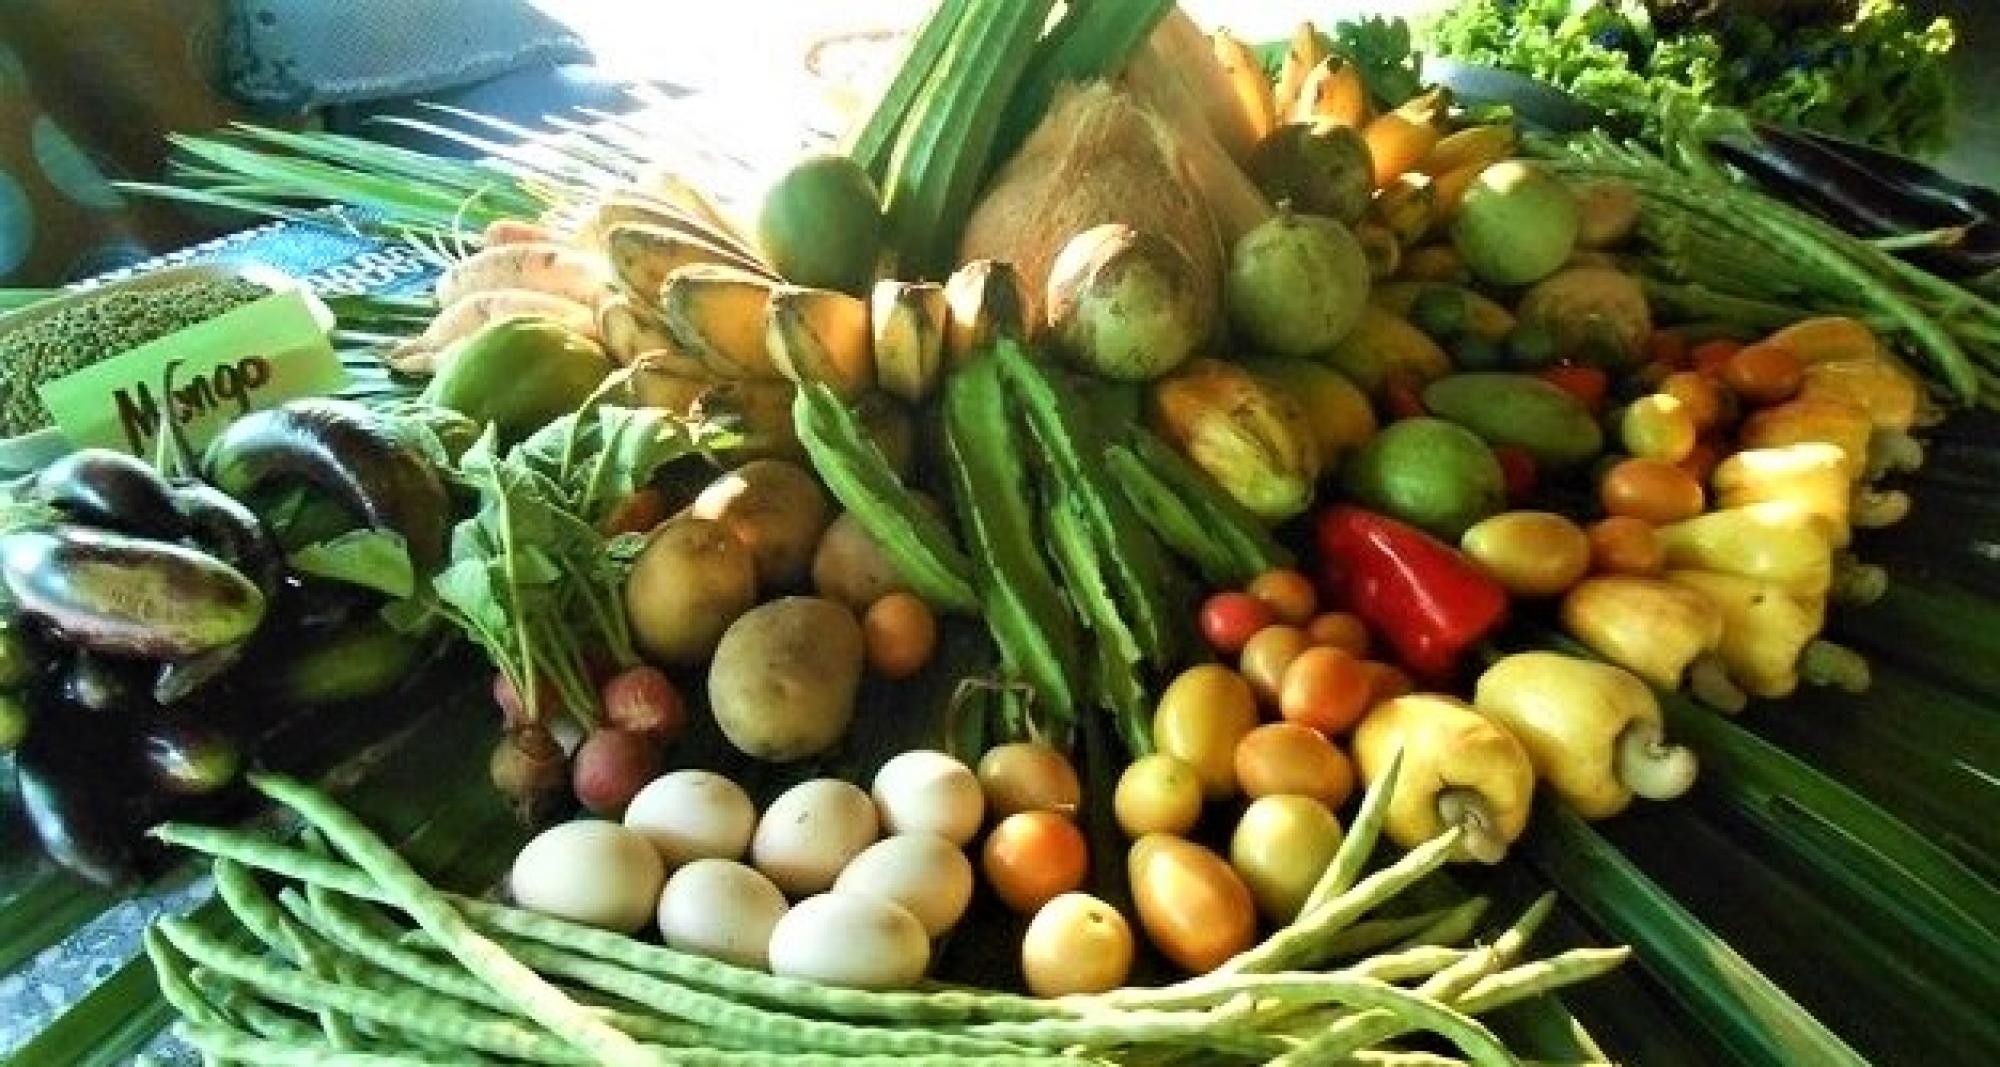 Abundance of vegetables at HEAL